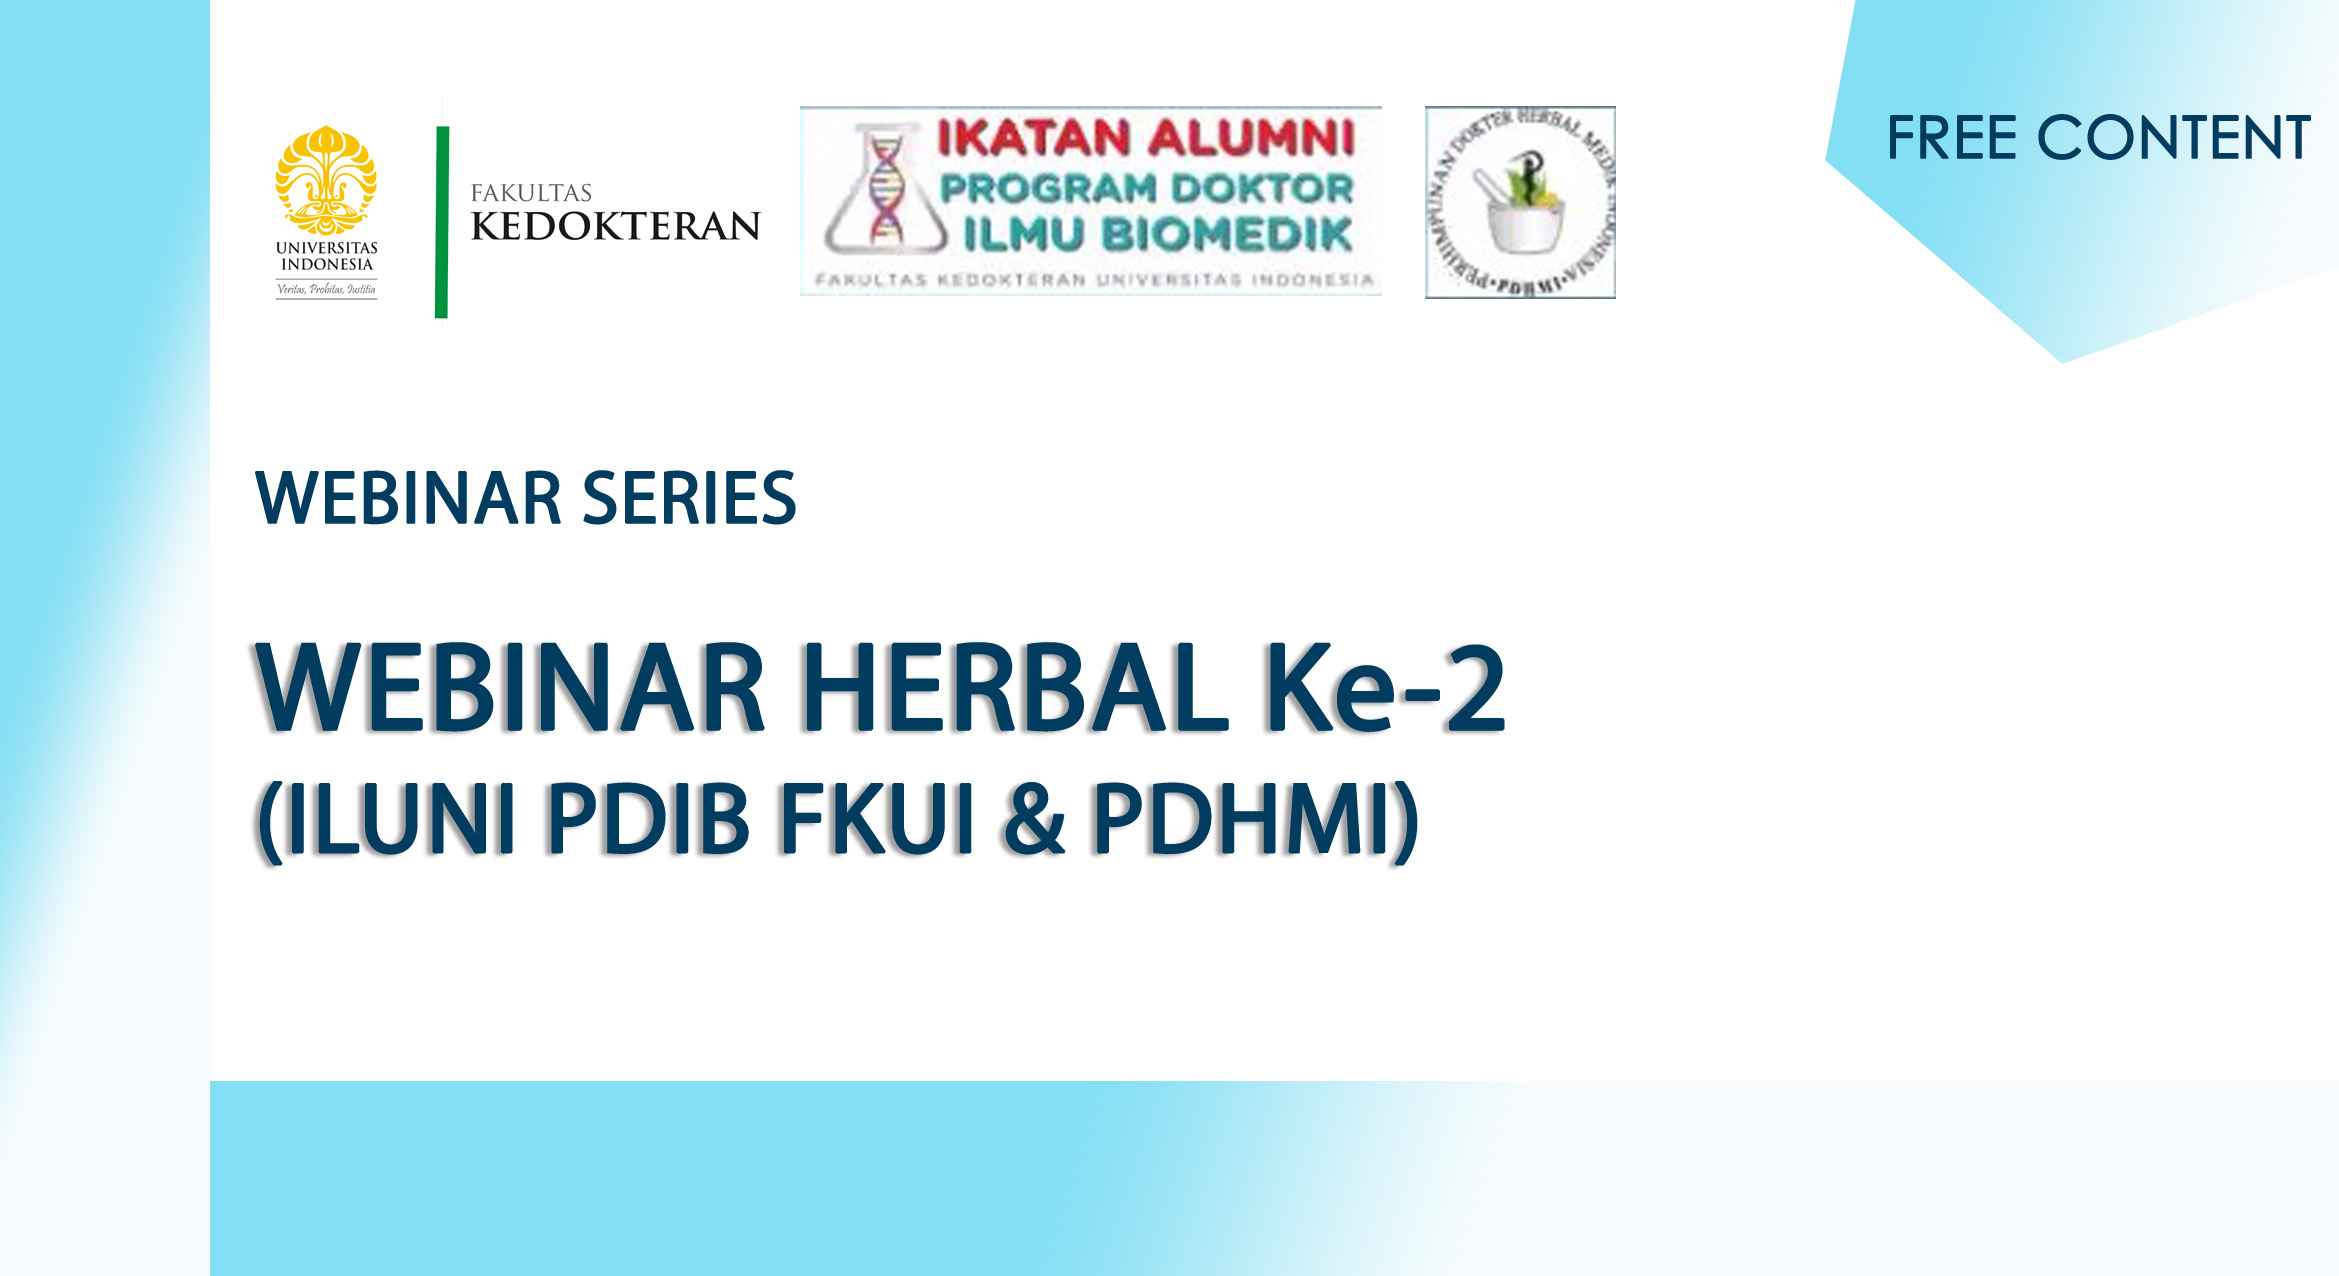 Course Image Webinar Herbal Series Ke-2 ILUNI PDIB FKUI & PDHMI 